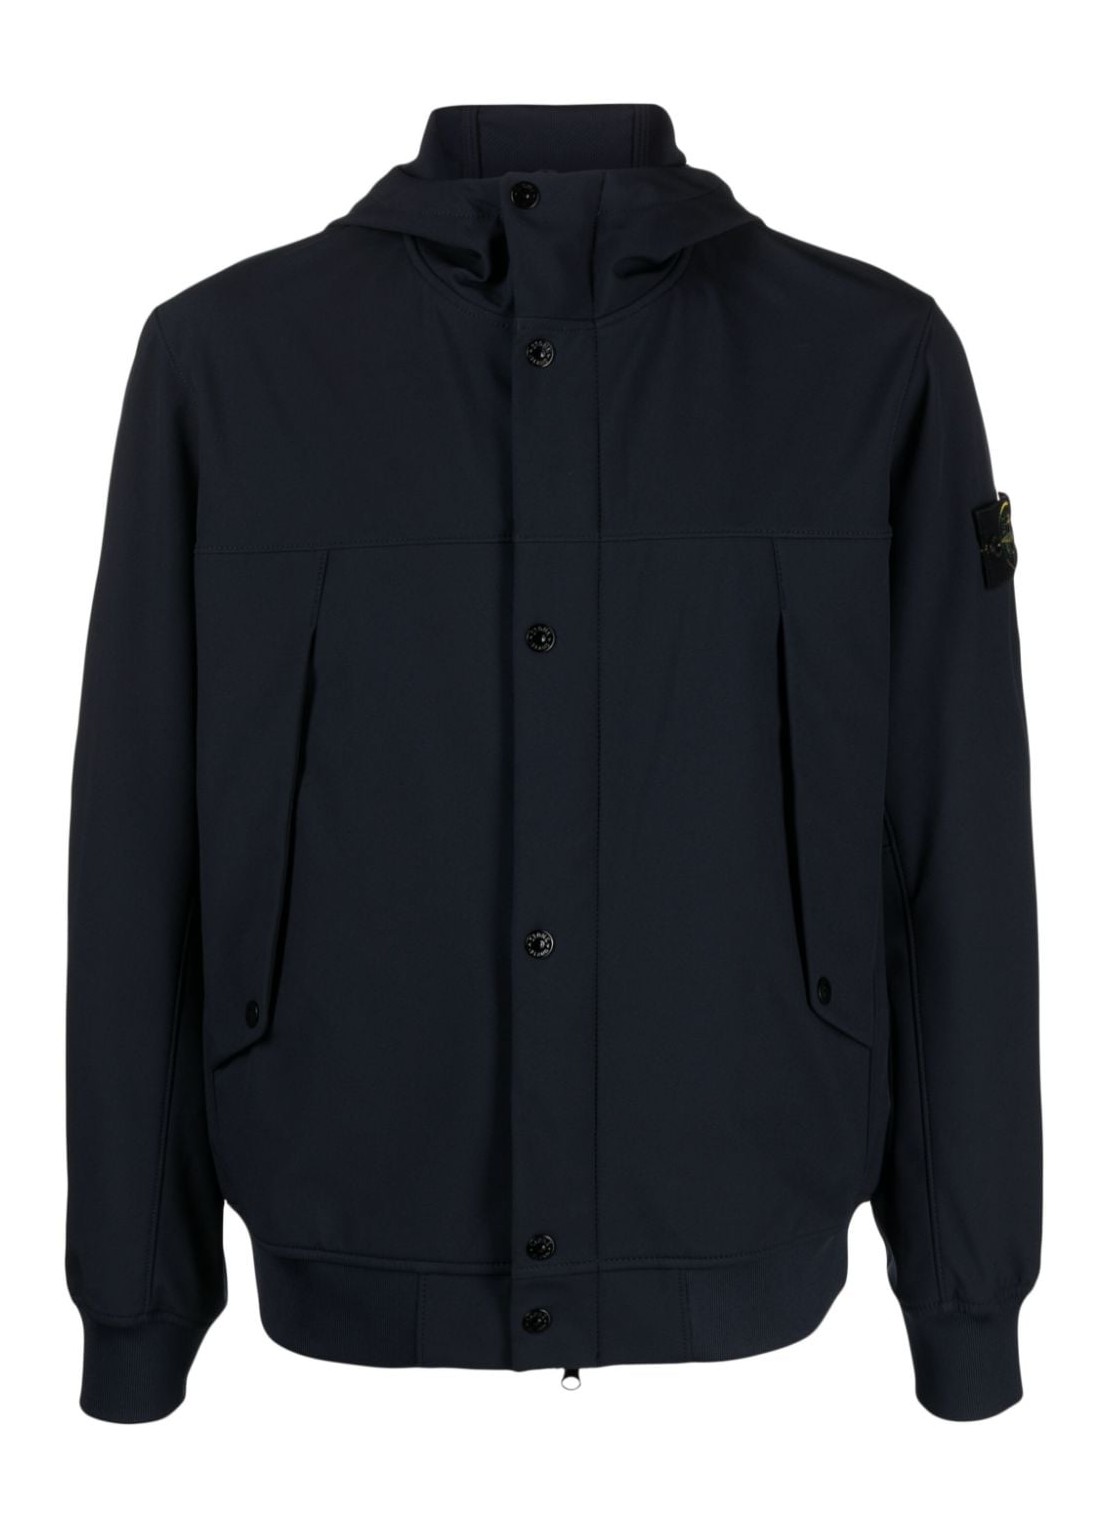 Outerwear stone island outerwear man jacket 801540227 v0020 talla XL
 